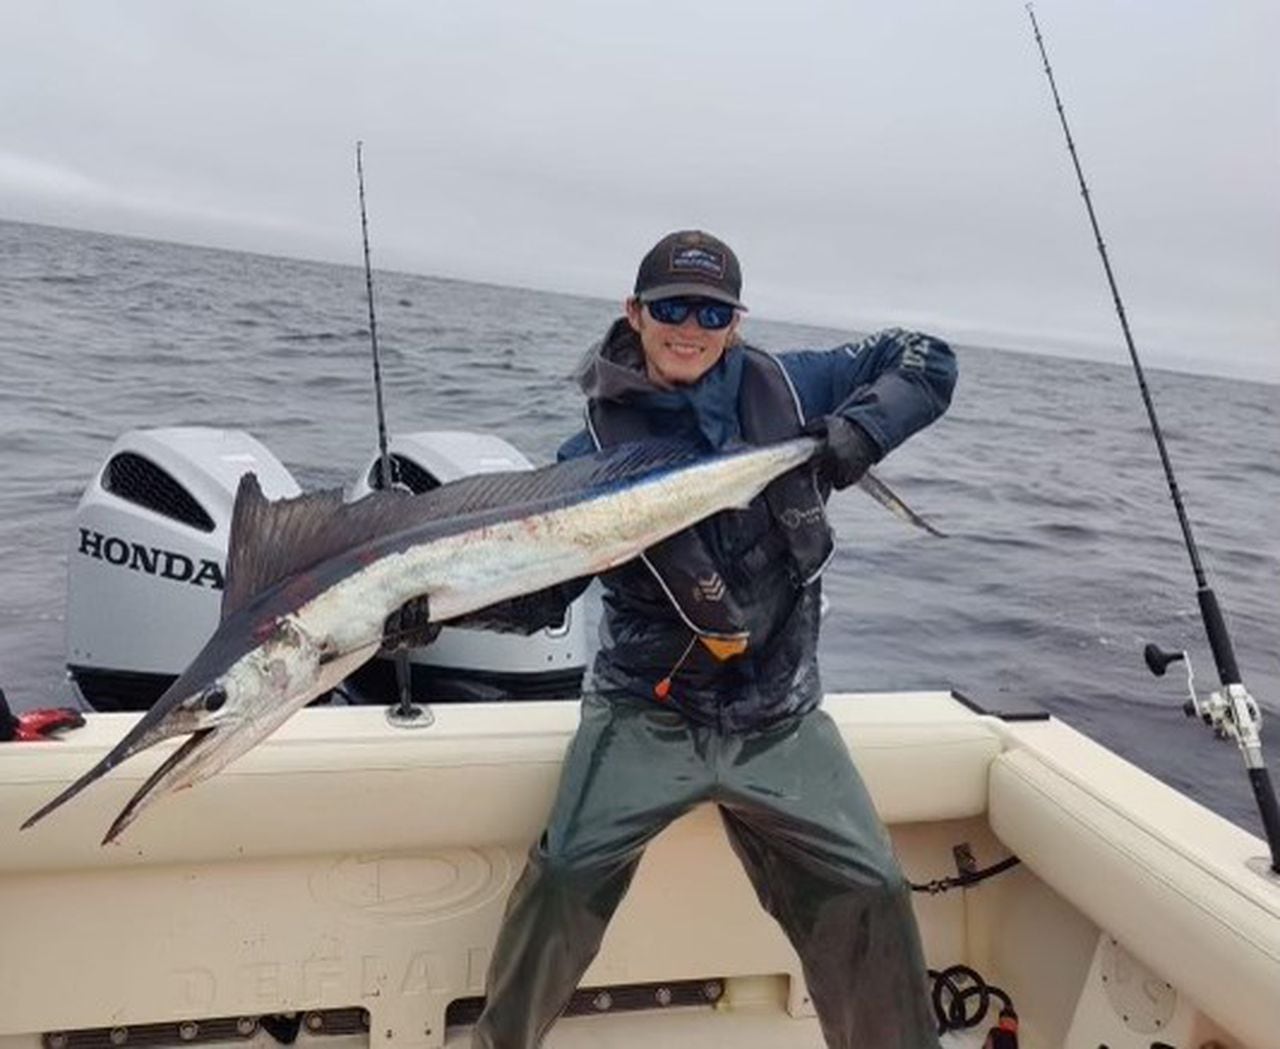  Rare catch: Angler lands shortbill spearfish off Washington coast 